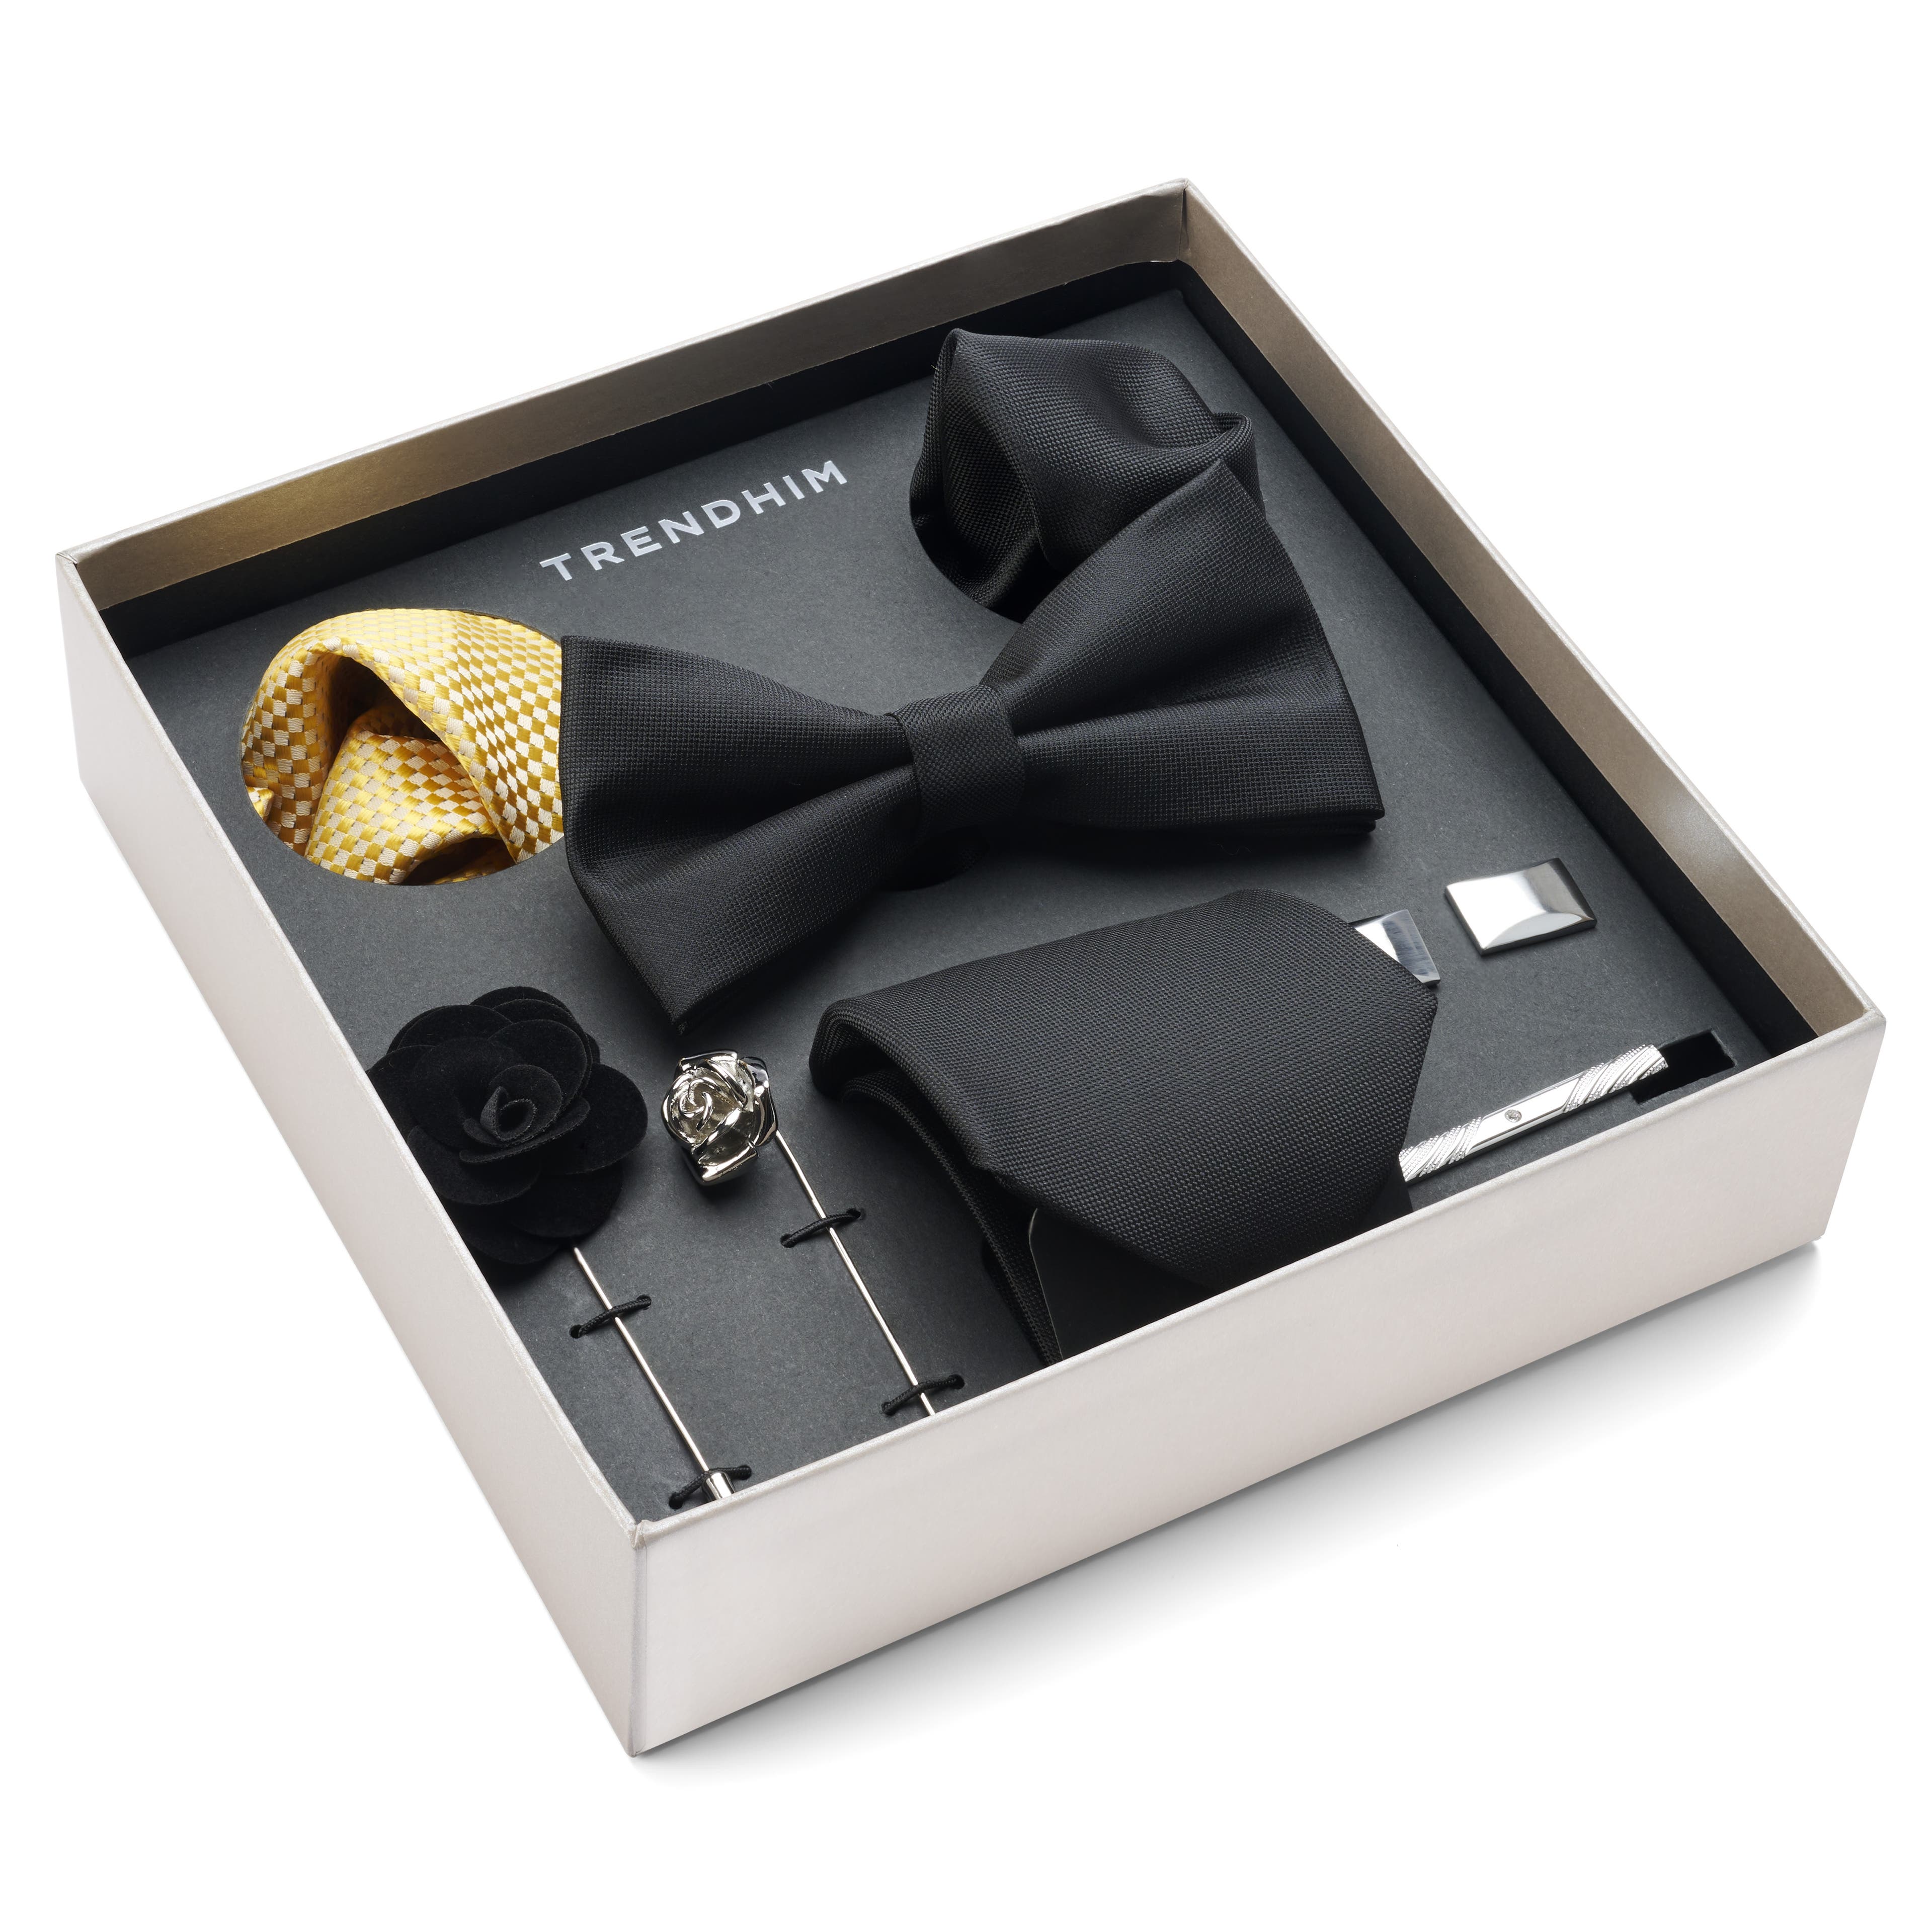 Cutie cadou cu accesorii pentru costum | Set cu negru, galben și argintiu